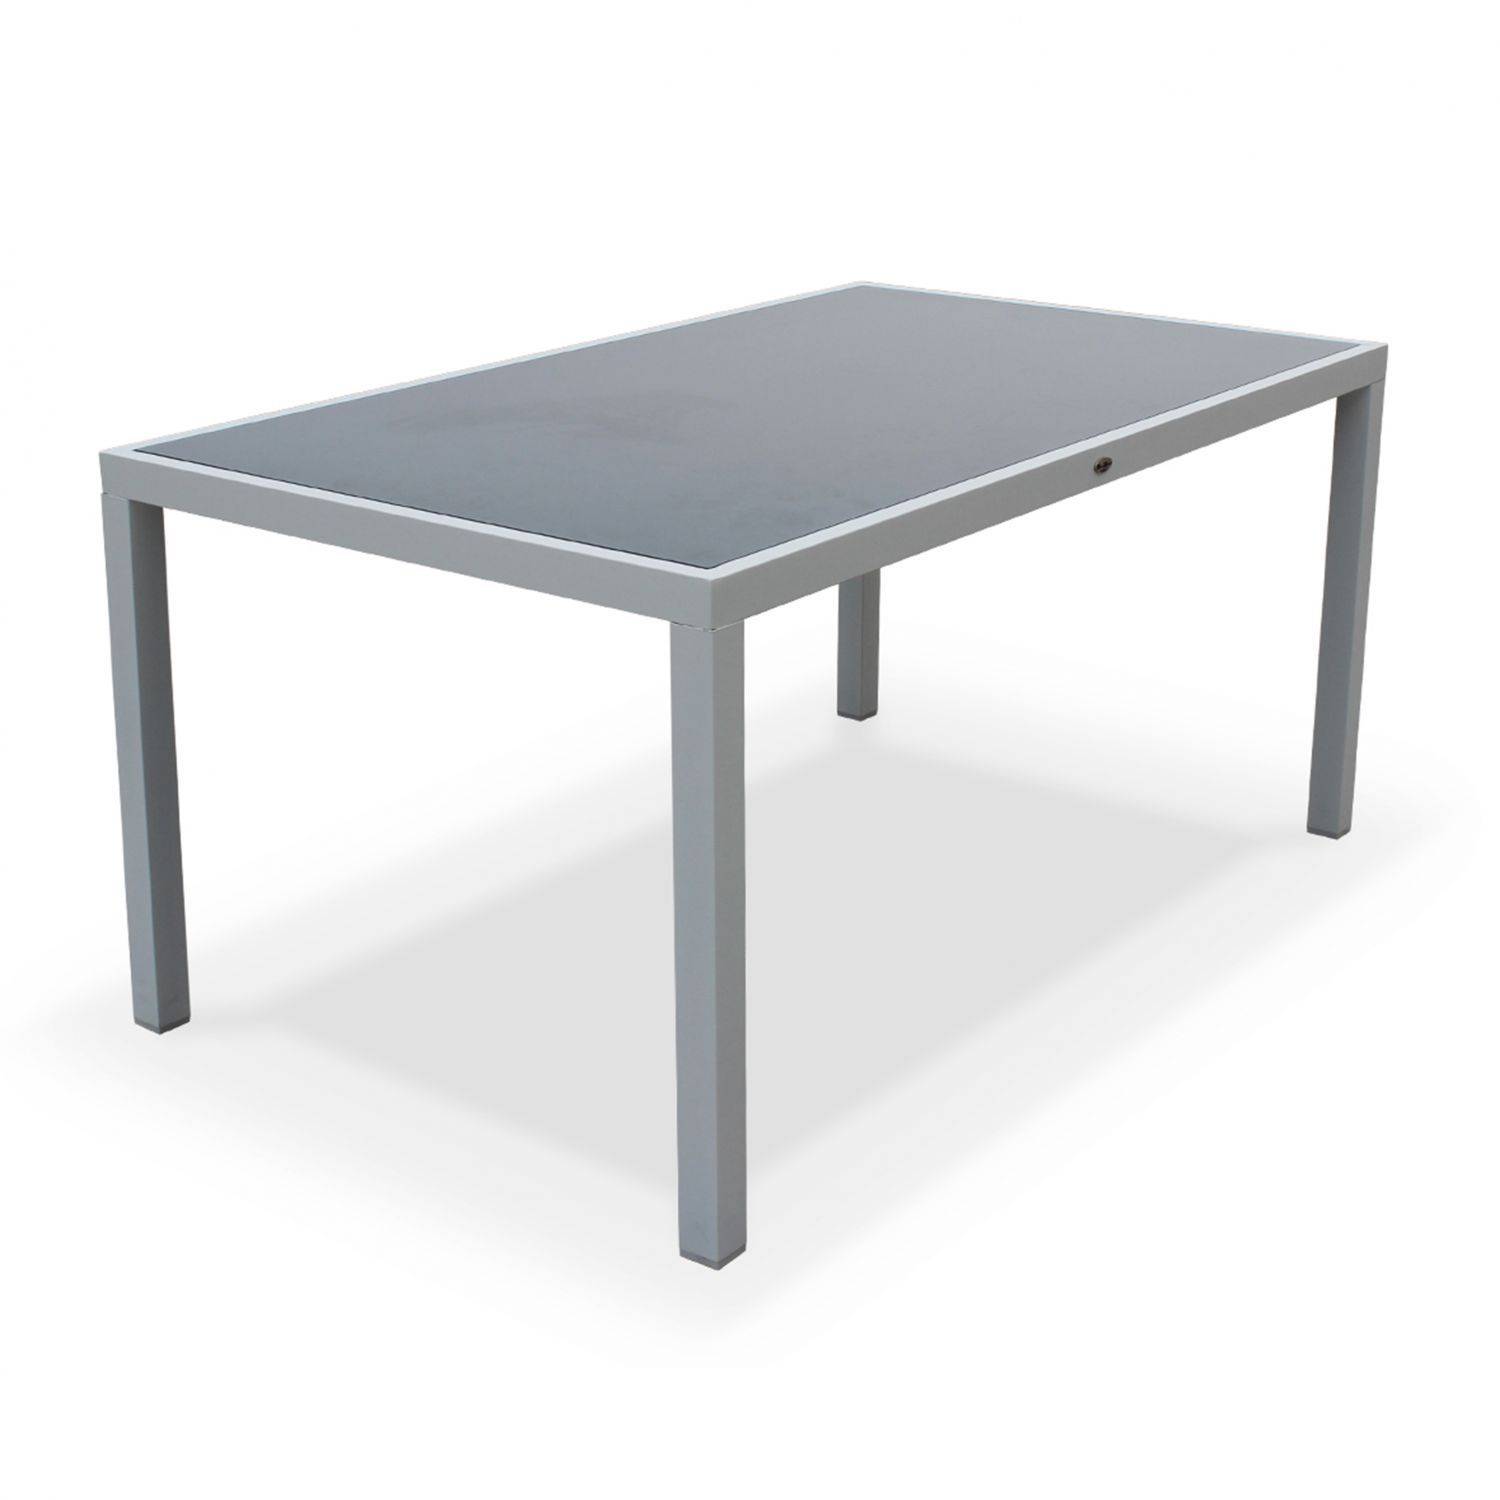 Gartengarnitur aus Aluminium und Textilene - Capua - Weiß, Grau - 1 großer rechteckiger Tisch, 6 stapelbare Sessel Photo3